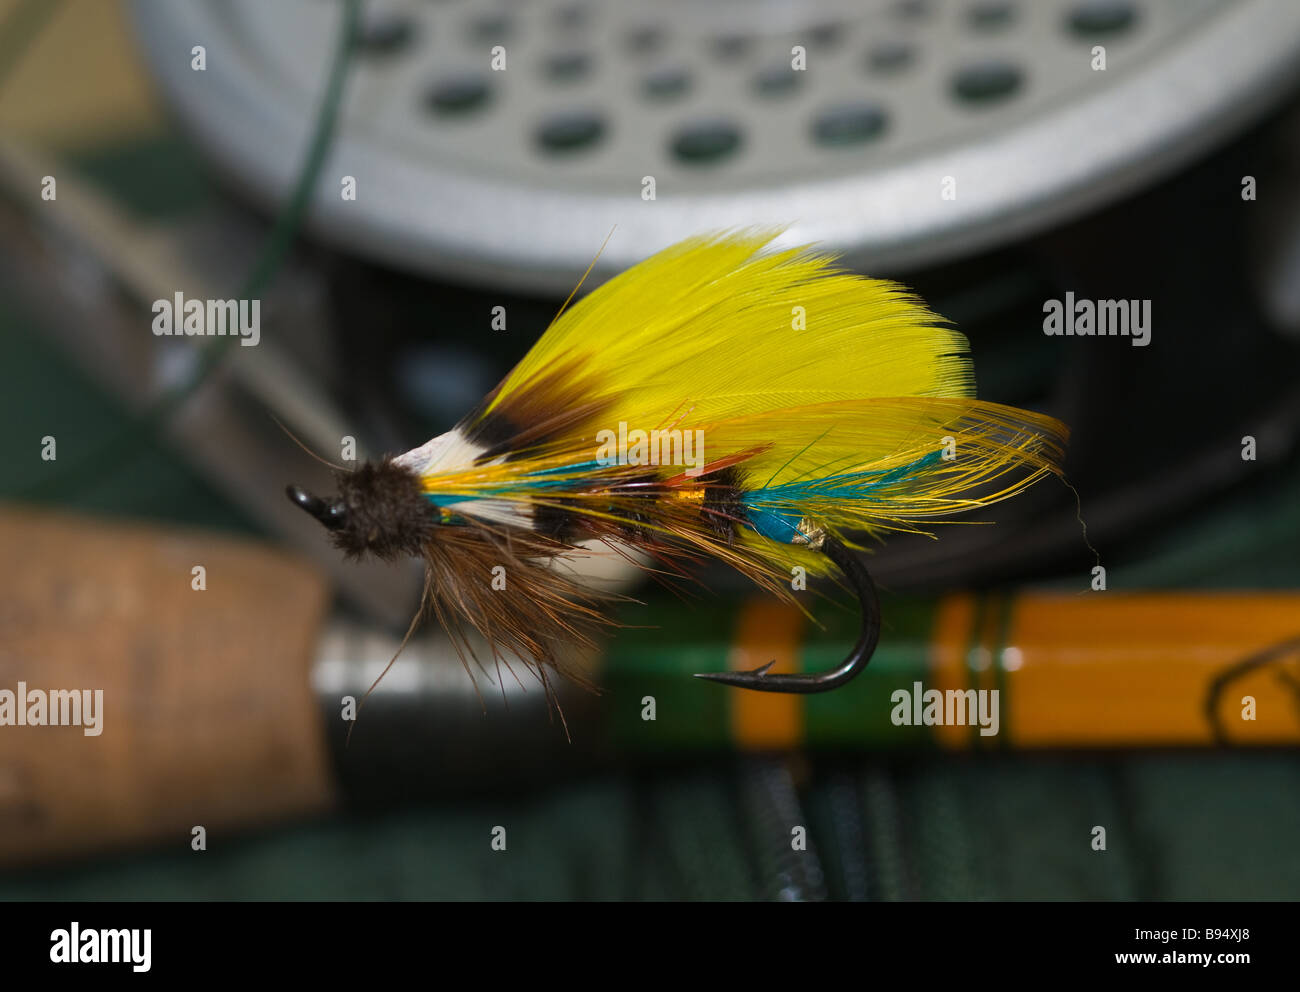 Sport fishing tackle box detail Salmon lures Alaska Stock Photo - Alamy